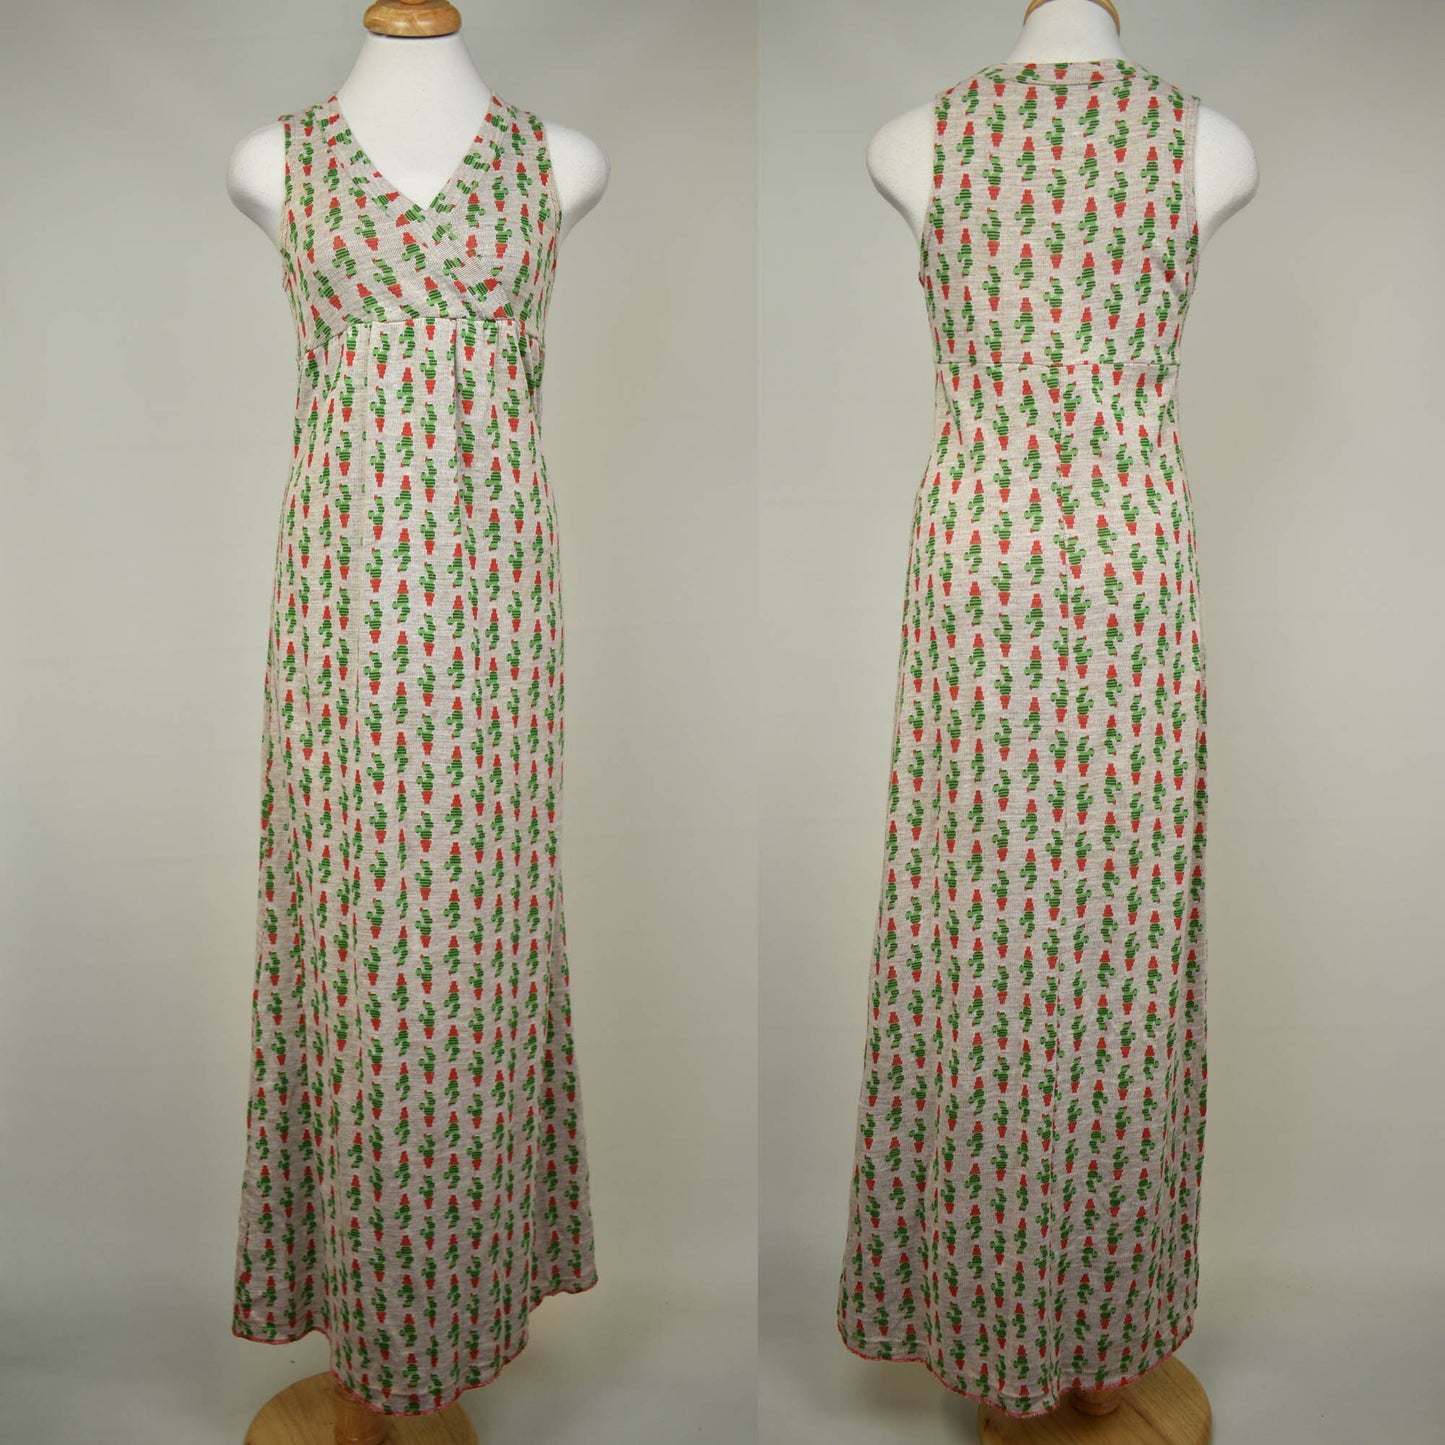 Vintage 70s Long Knit Dress by Utopia - Cactus Print - Medium Size - Acrylic